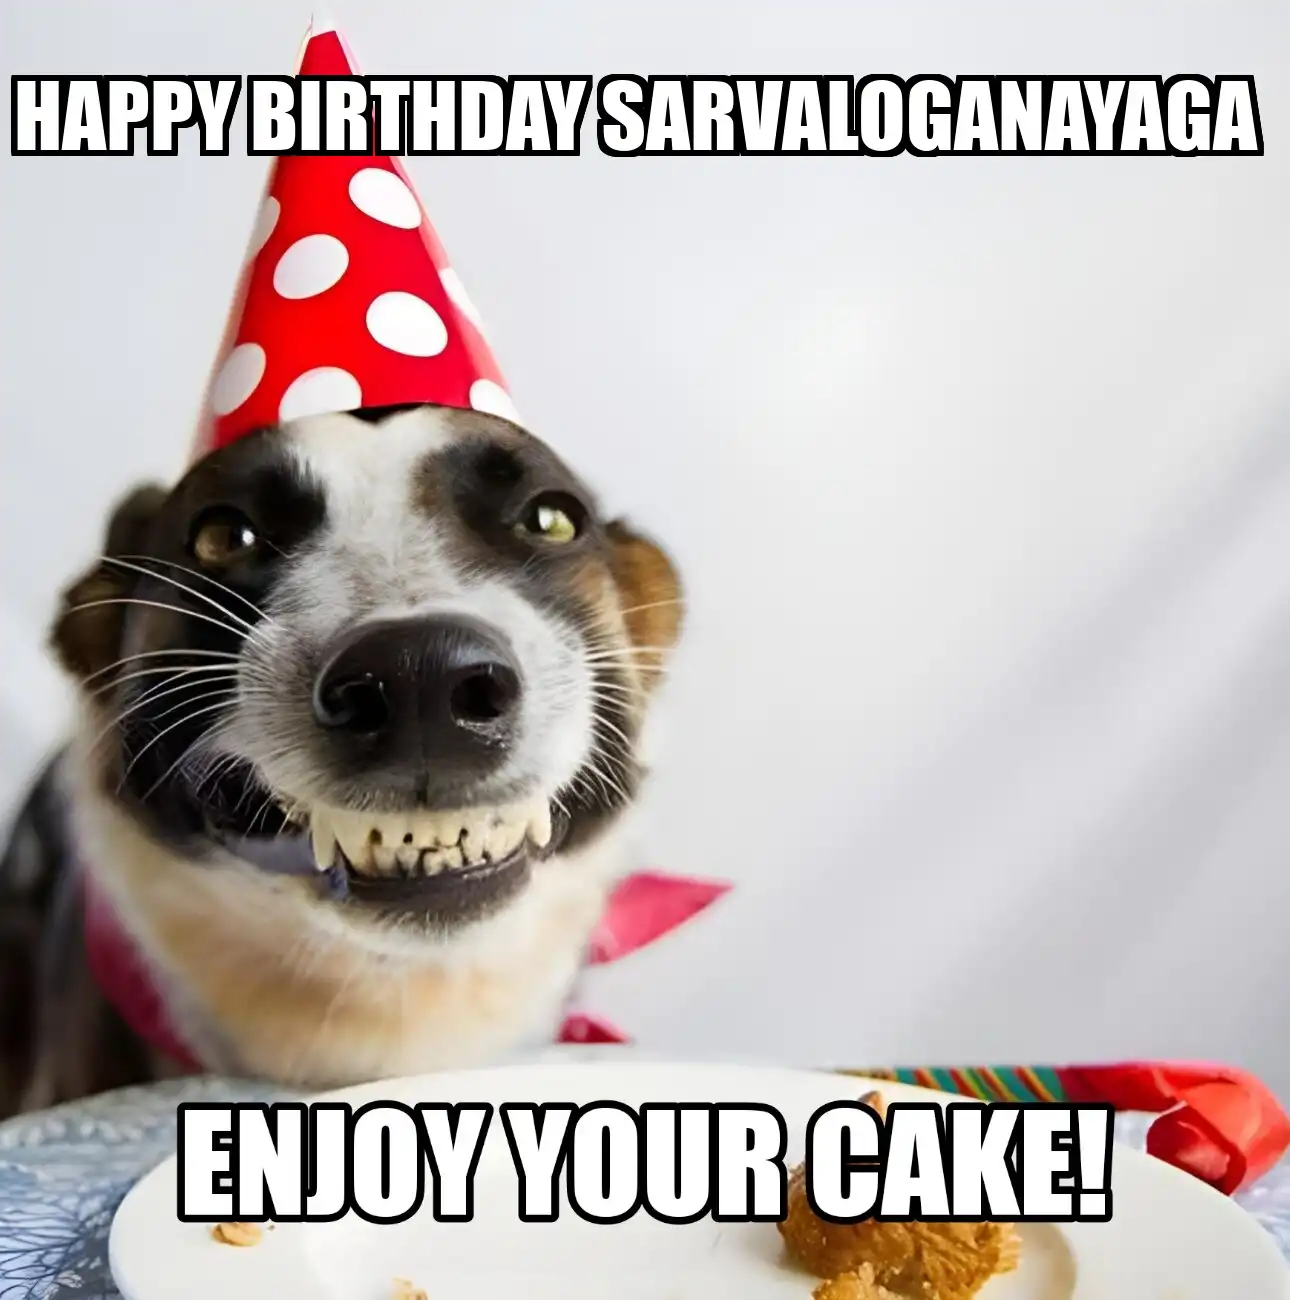 Happy Birthday Sarvaloganayaga Enjoy Your Cake Dog Meme